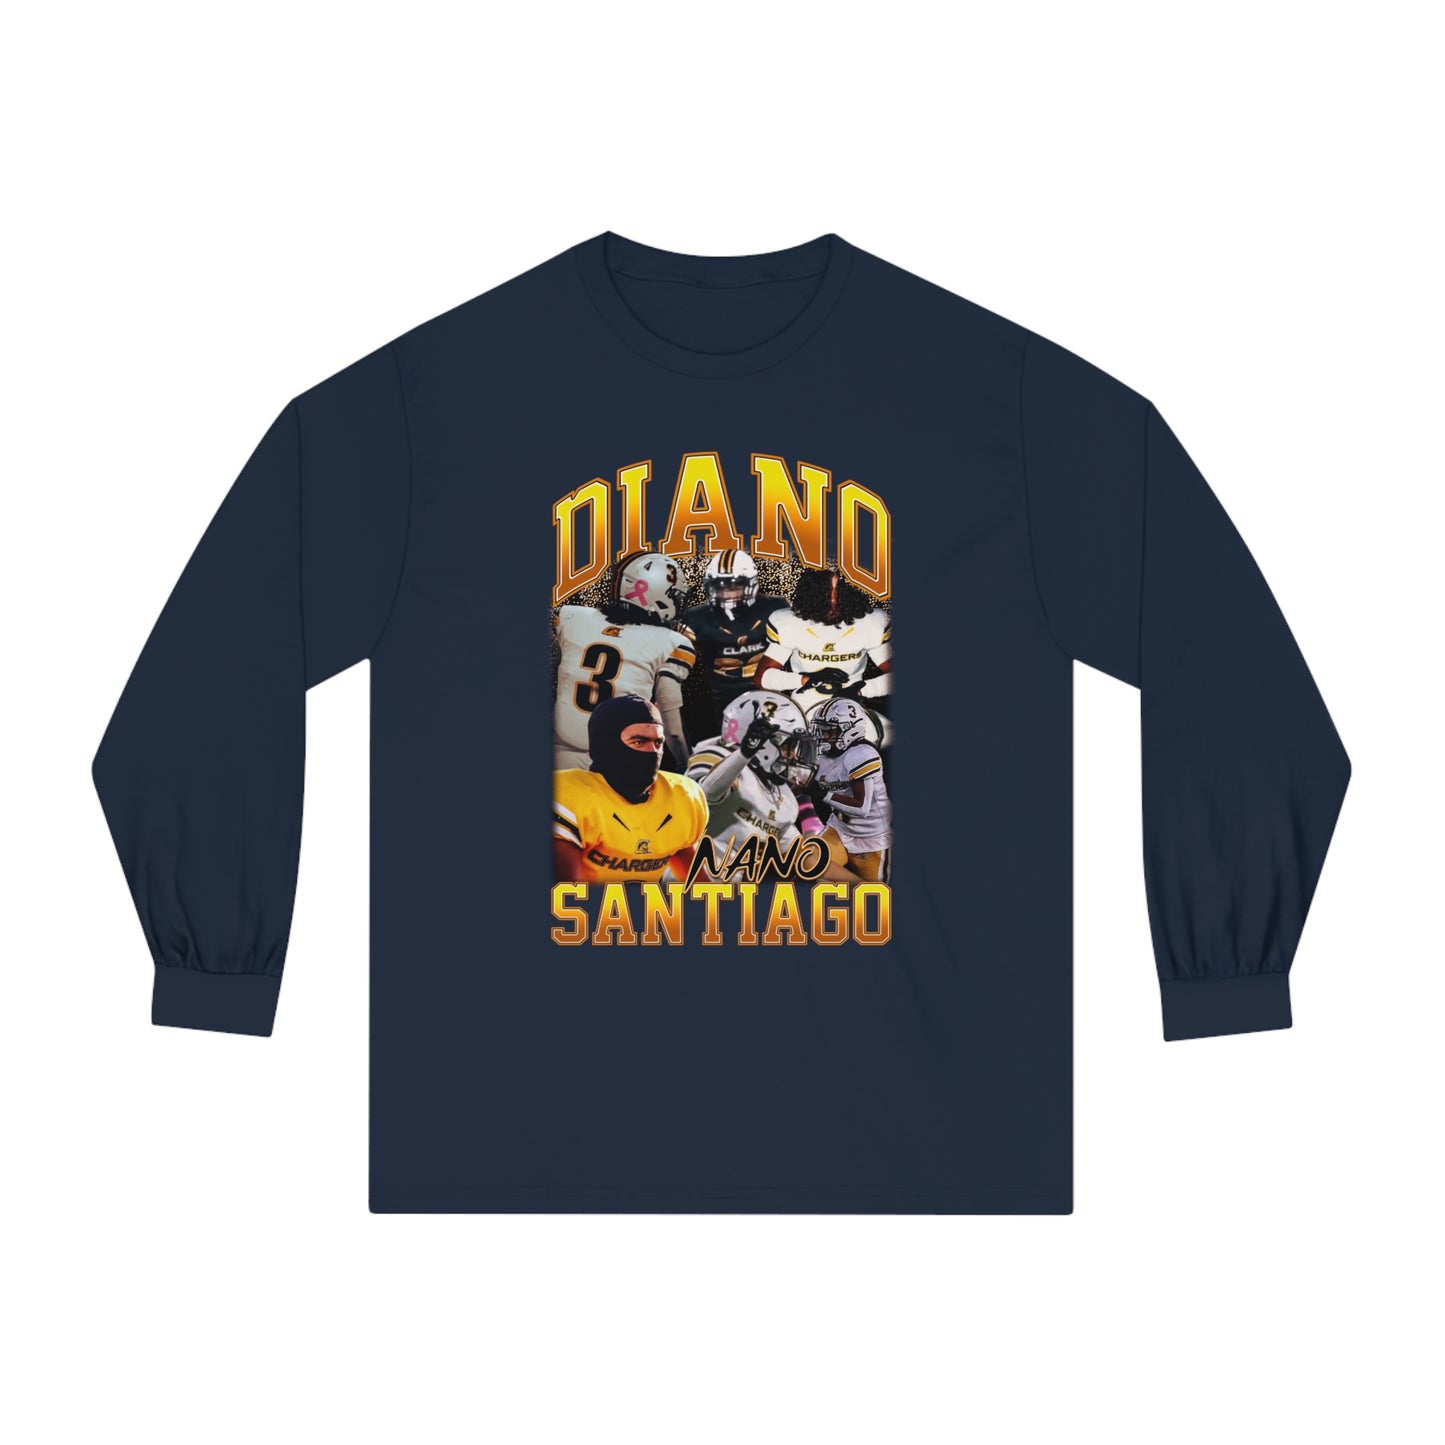 Diano Santiago Long Sleeve T-Shirt